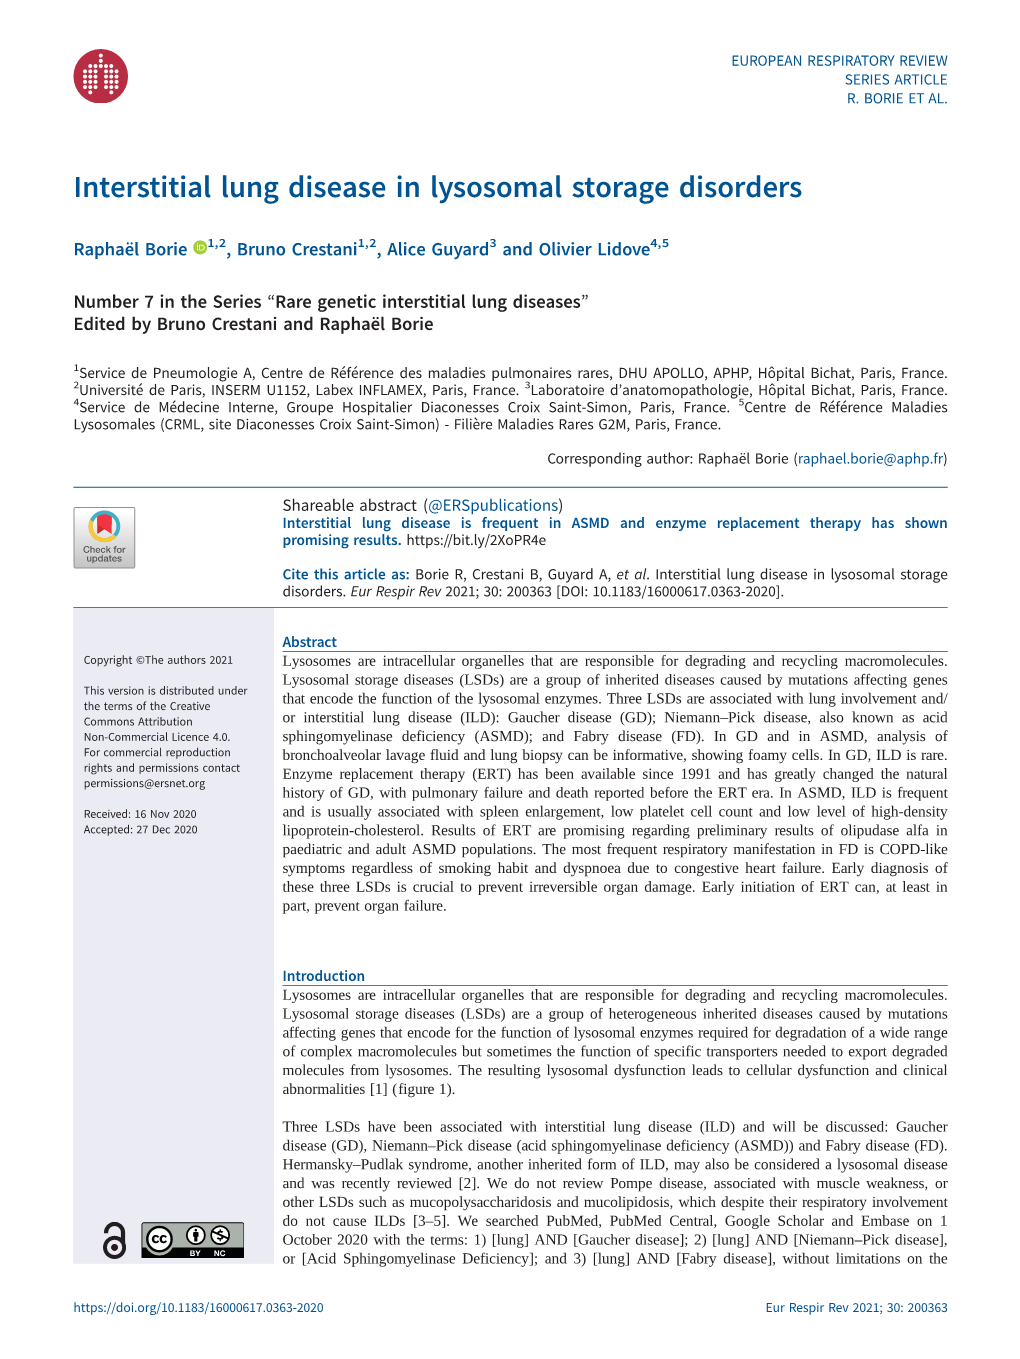 Interstitial Lung Disease in Lysosomal Storage Disorders